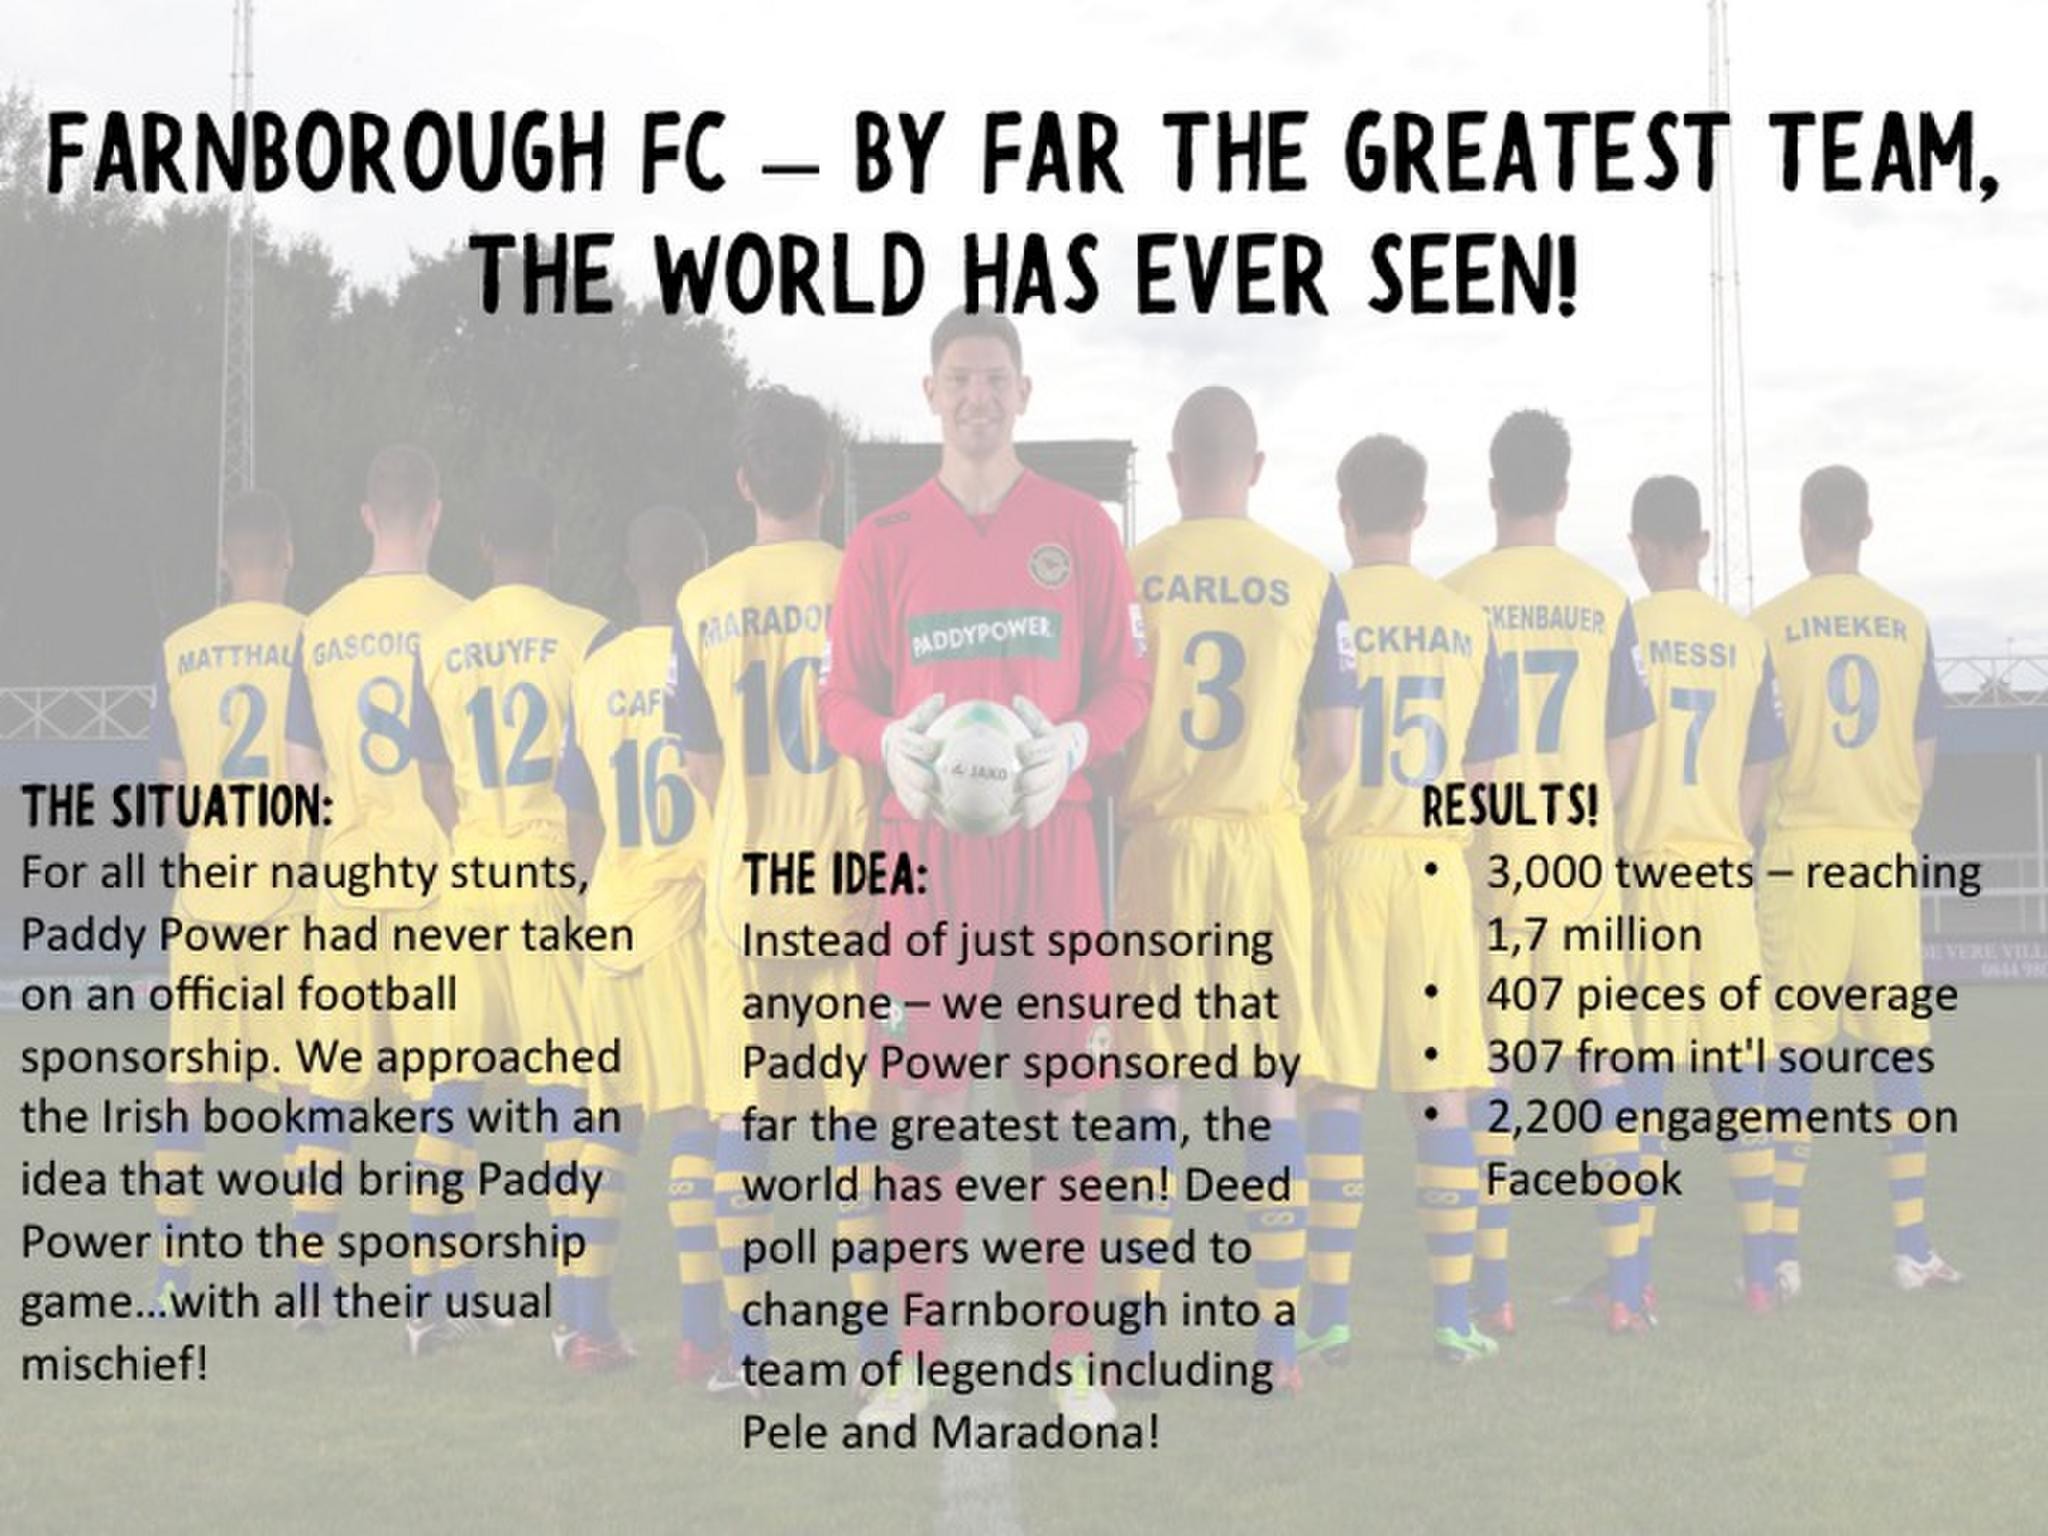 FARNBOROUGH FC - THE GREATEST TEAM